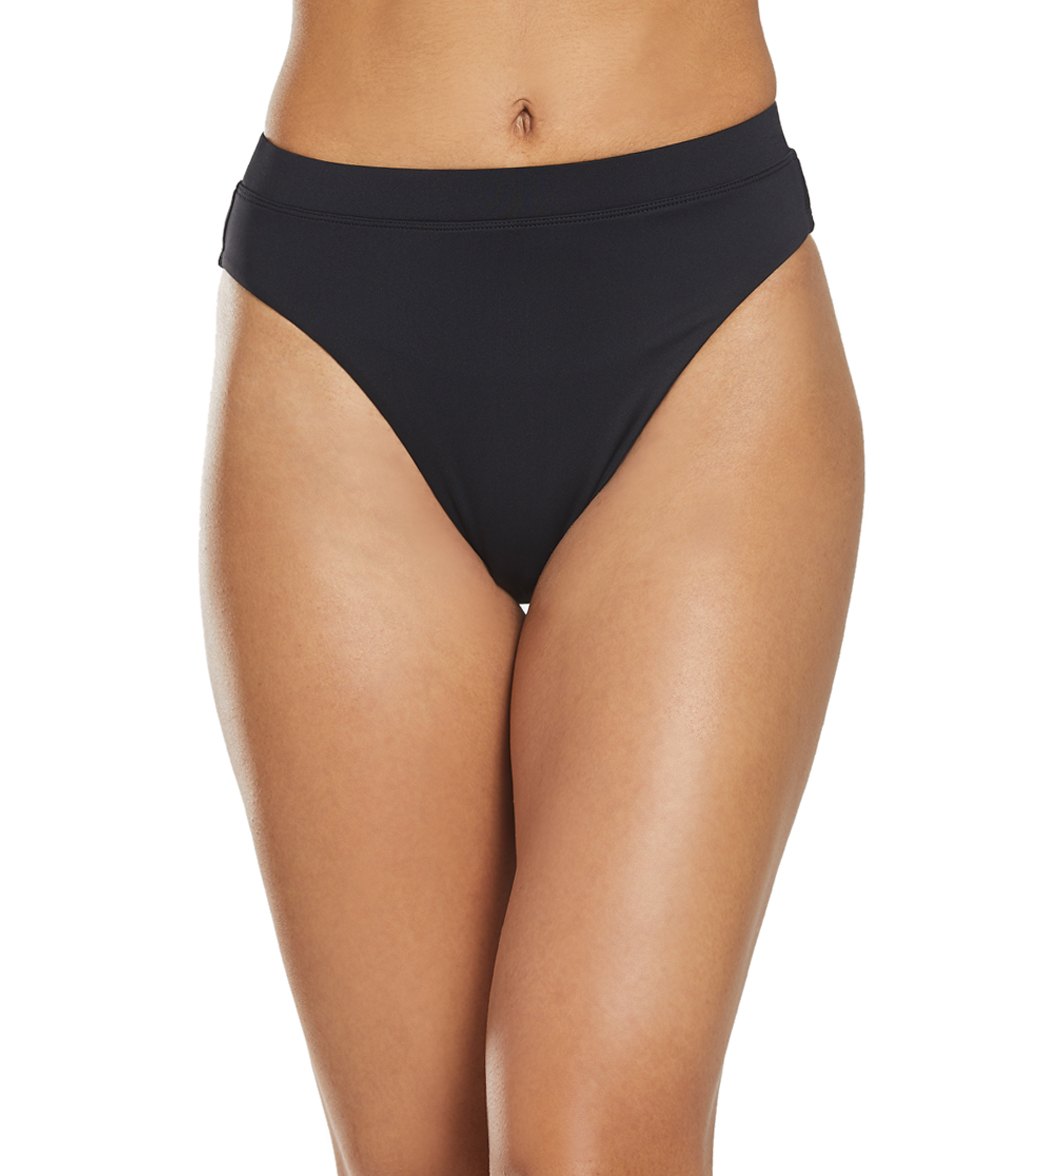 Swim Systems Solid Soleil High Waisted Bikini Bottom - Onyx Xl - Swimoutlet.com